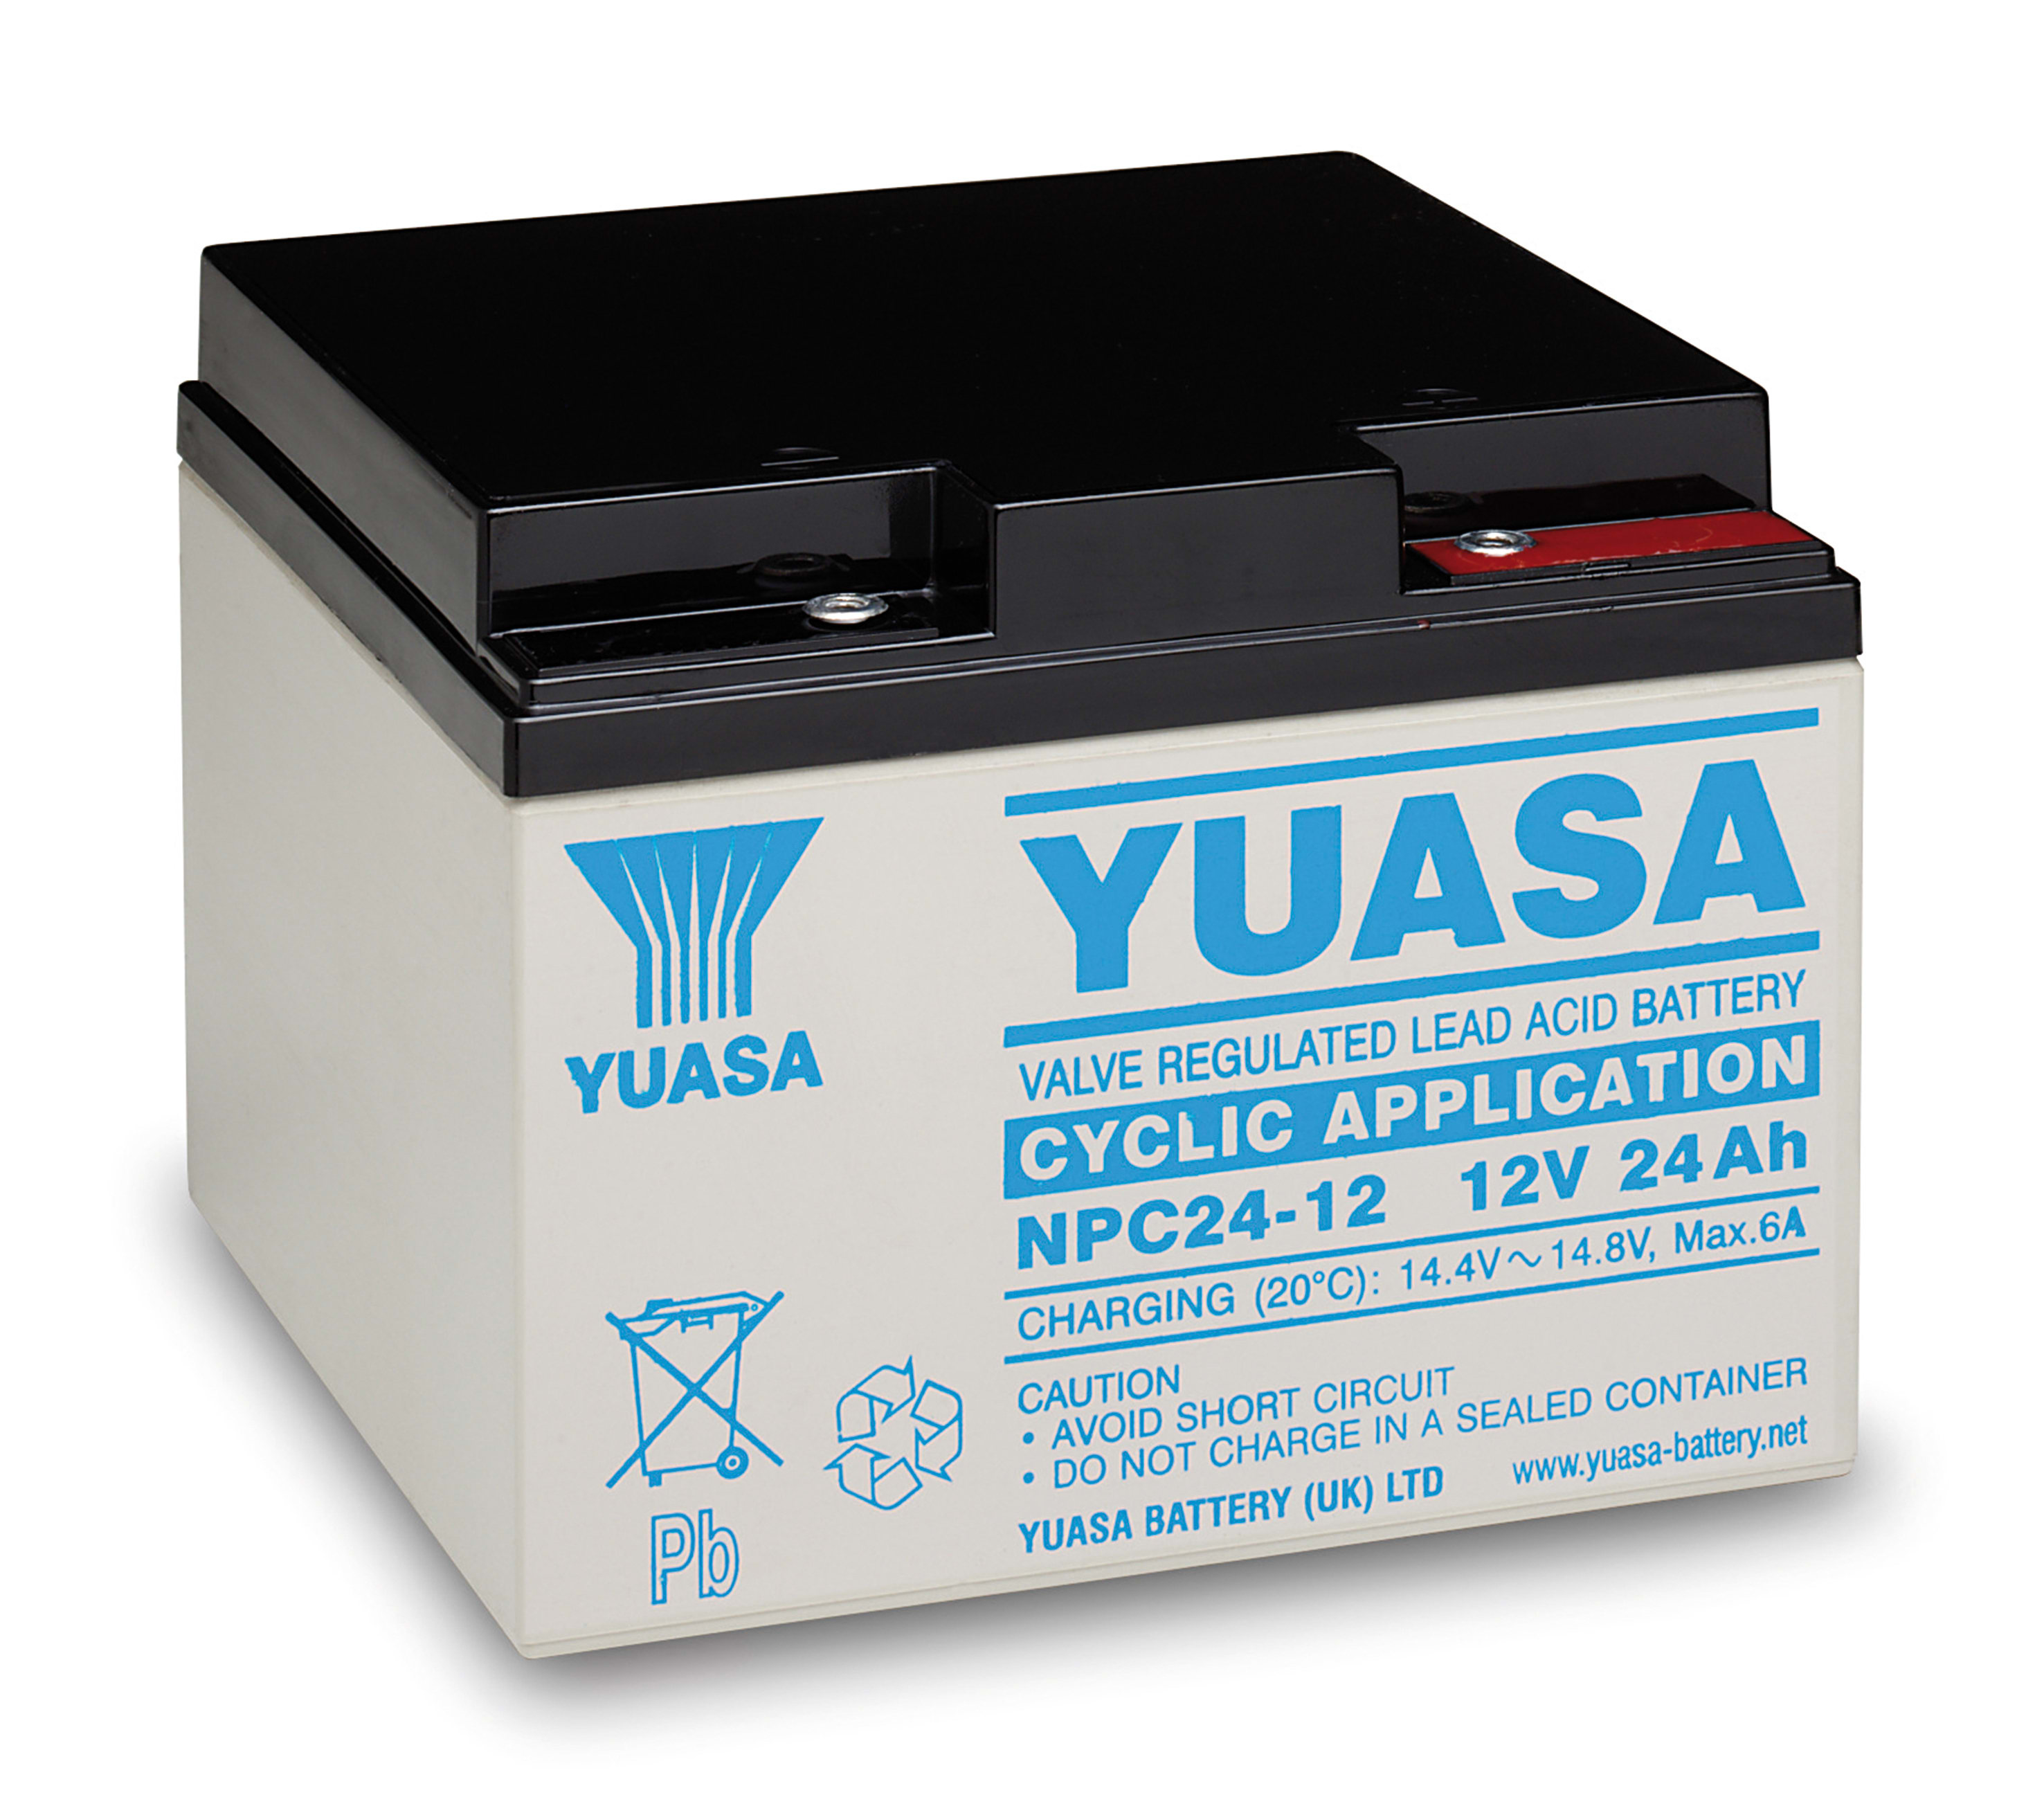 Аккумуляторная батарея Yuasa np24-12i. Аккумуляторы Yuasa swl1100 -40a. Аккумулятор для электромобиля 12v. Прозрачные АКБ. Yuasa 12v